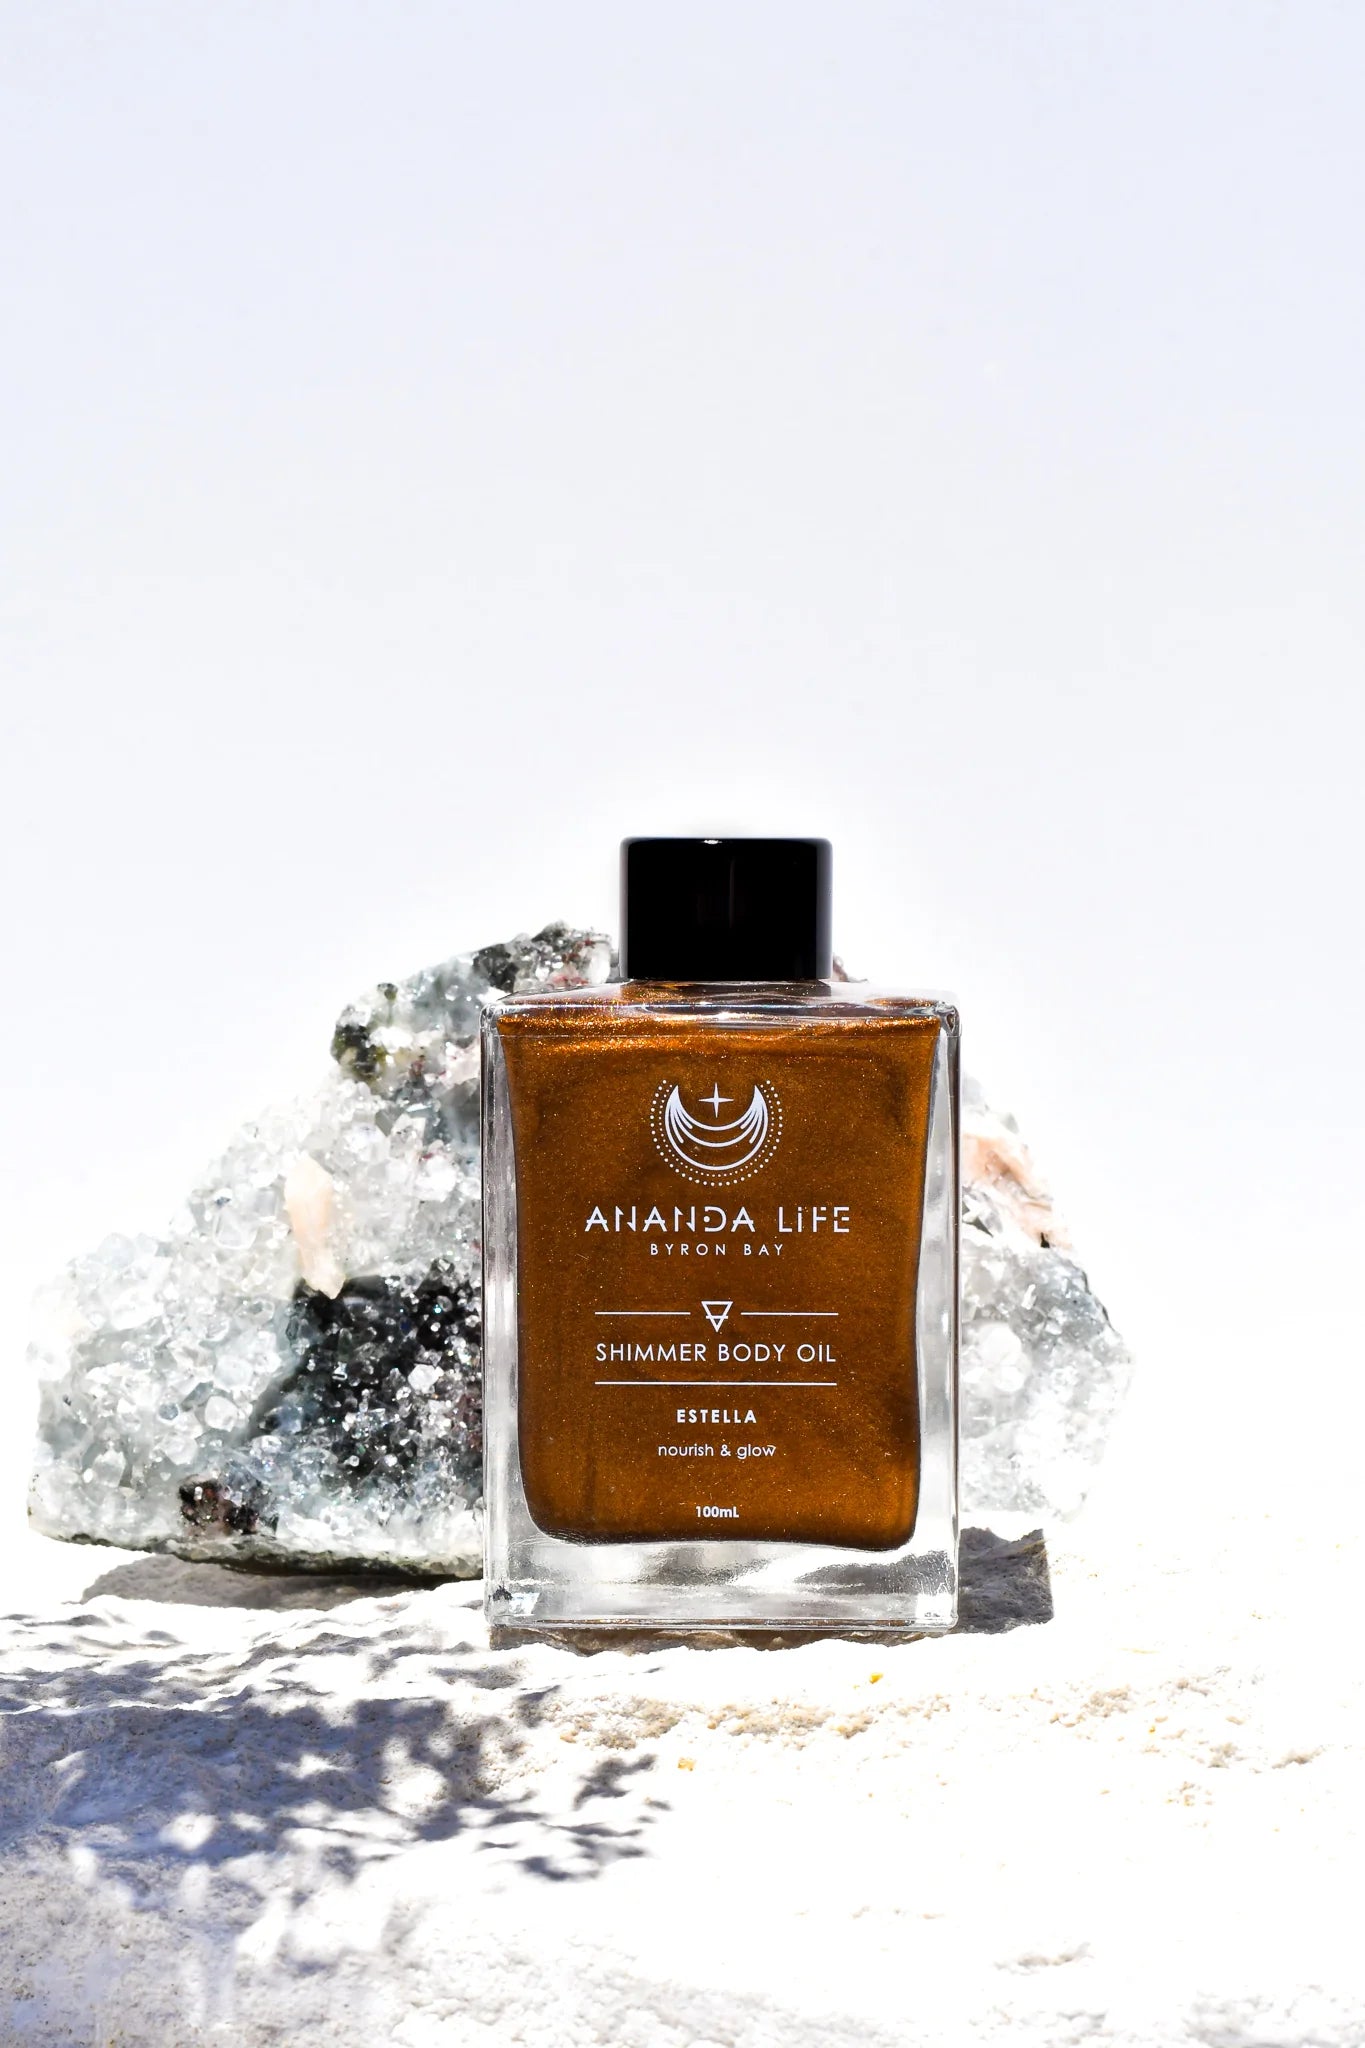 Ananda Life- Shimmer Body Oil- Estella